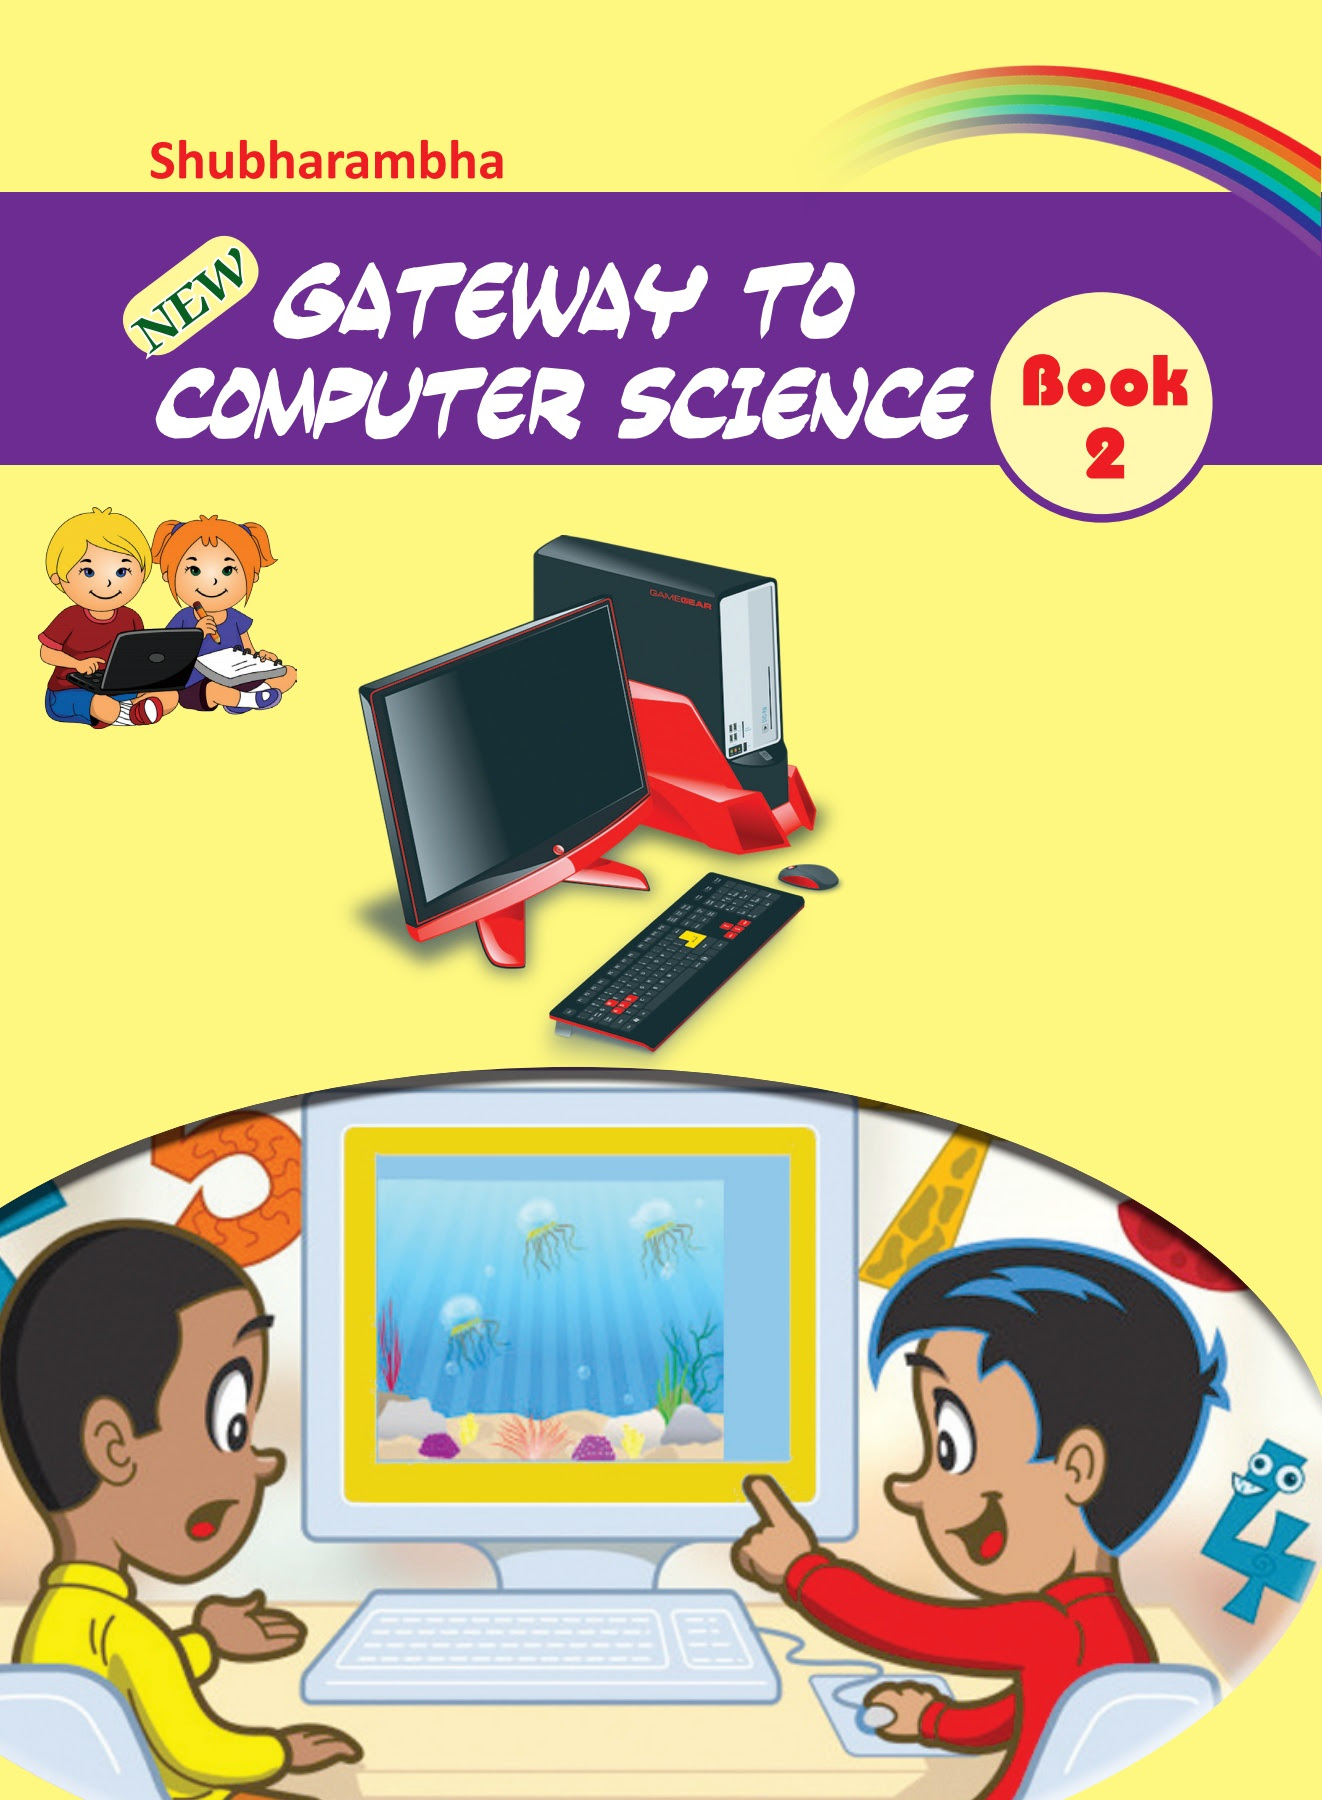 Gateway games why won't gateway games download to my gateway computer. New Gateway To Computer Science 2 Flip Ebook Pages 1 50 Anyflip Anyflip